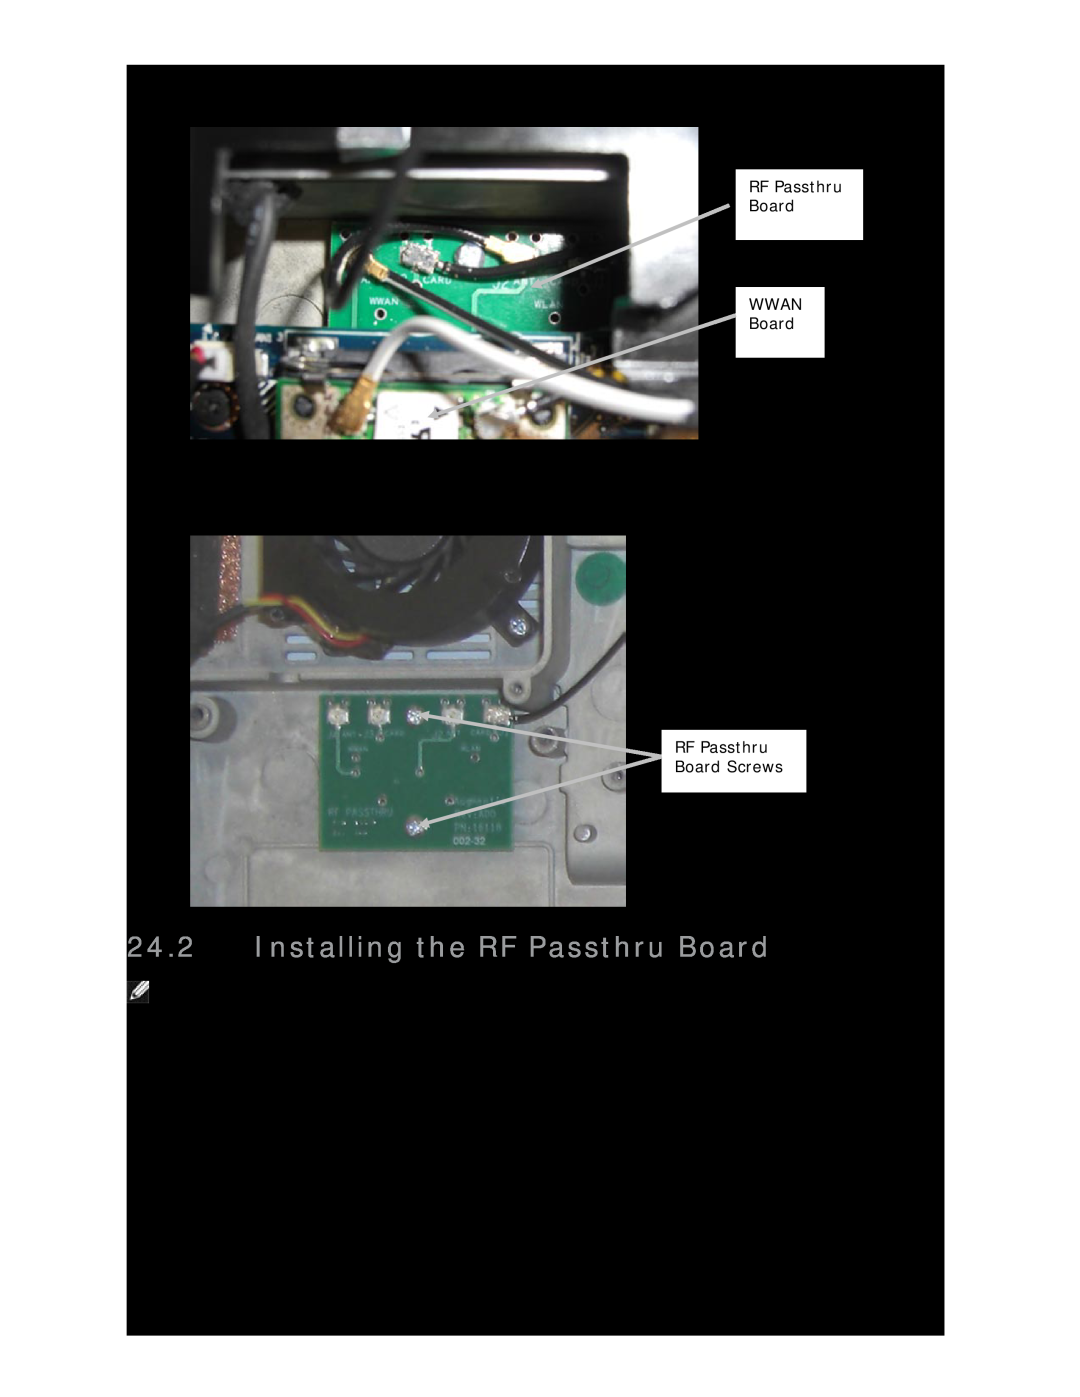 Dell D630 service manual Installing the RF Passthru Board 